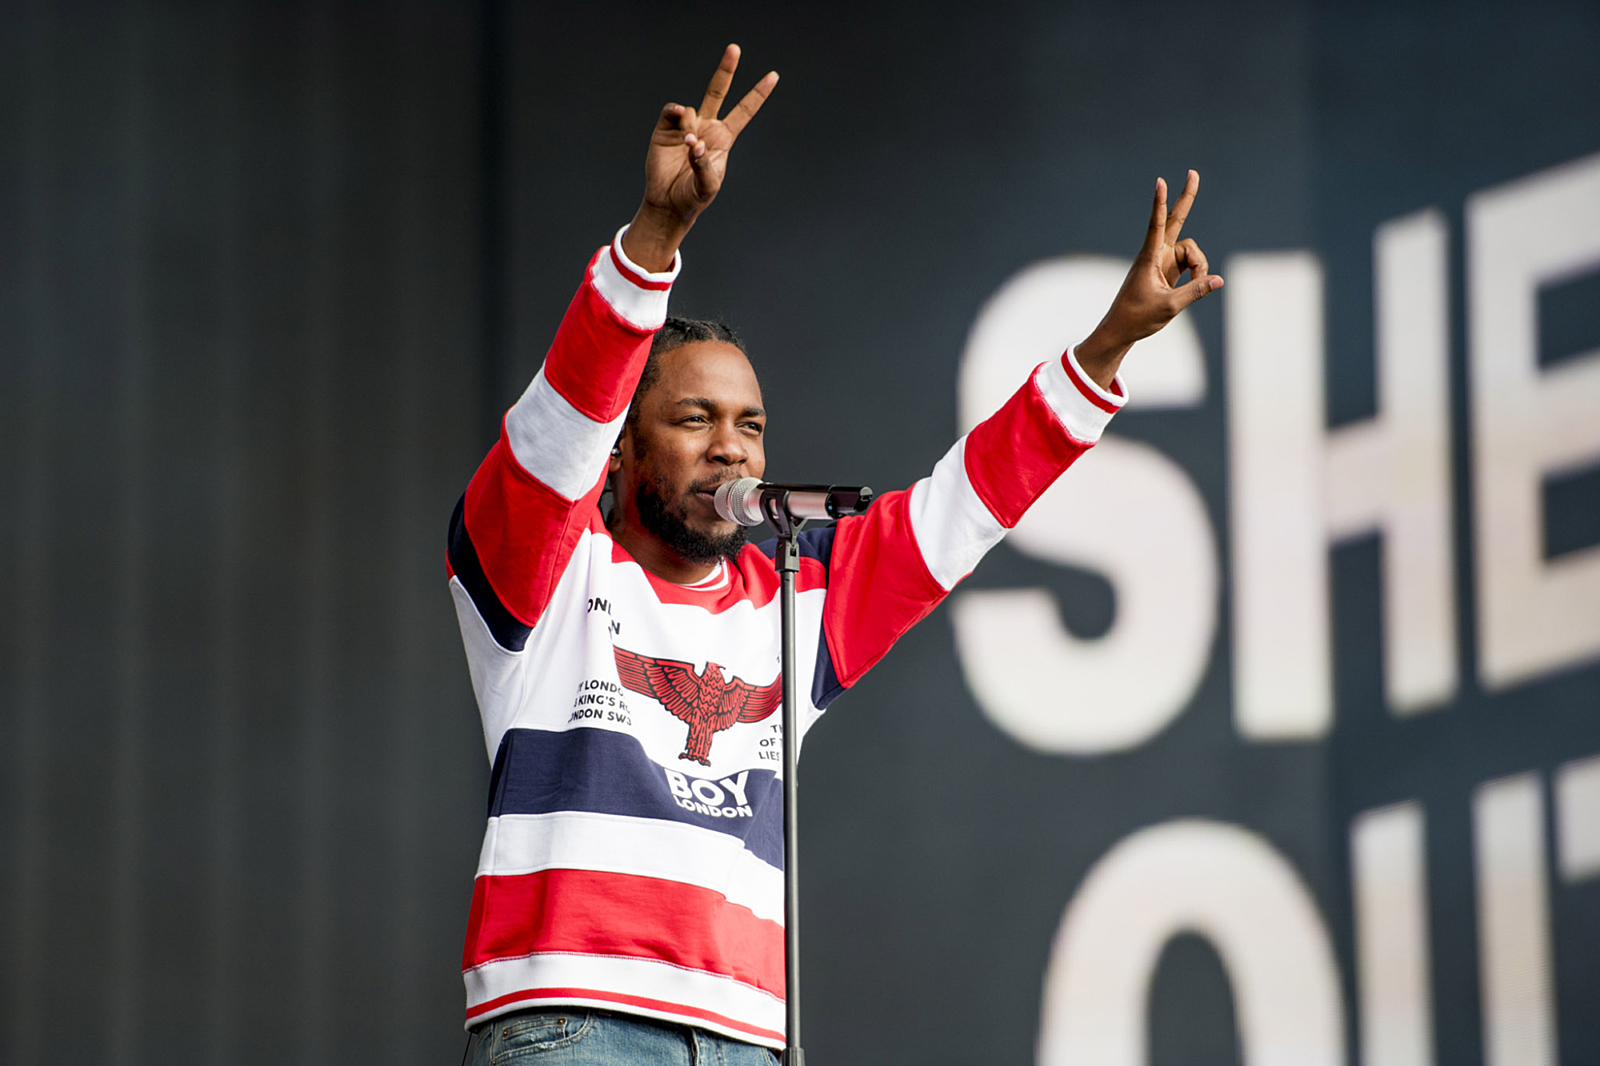 Kendrick Lamar and Paul McCartney to headline this year's Glastonbury Festival